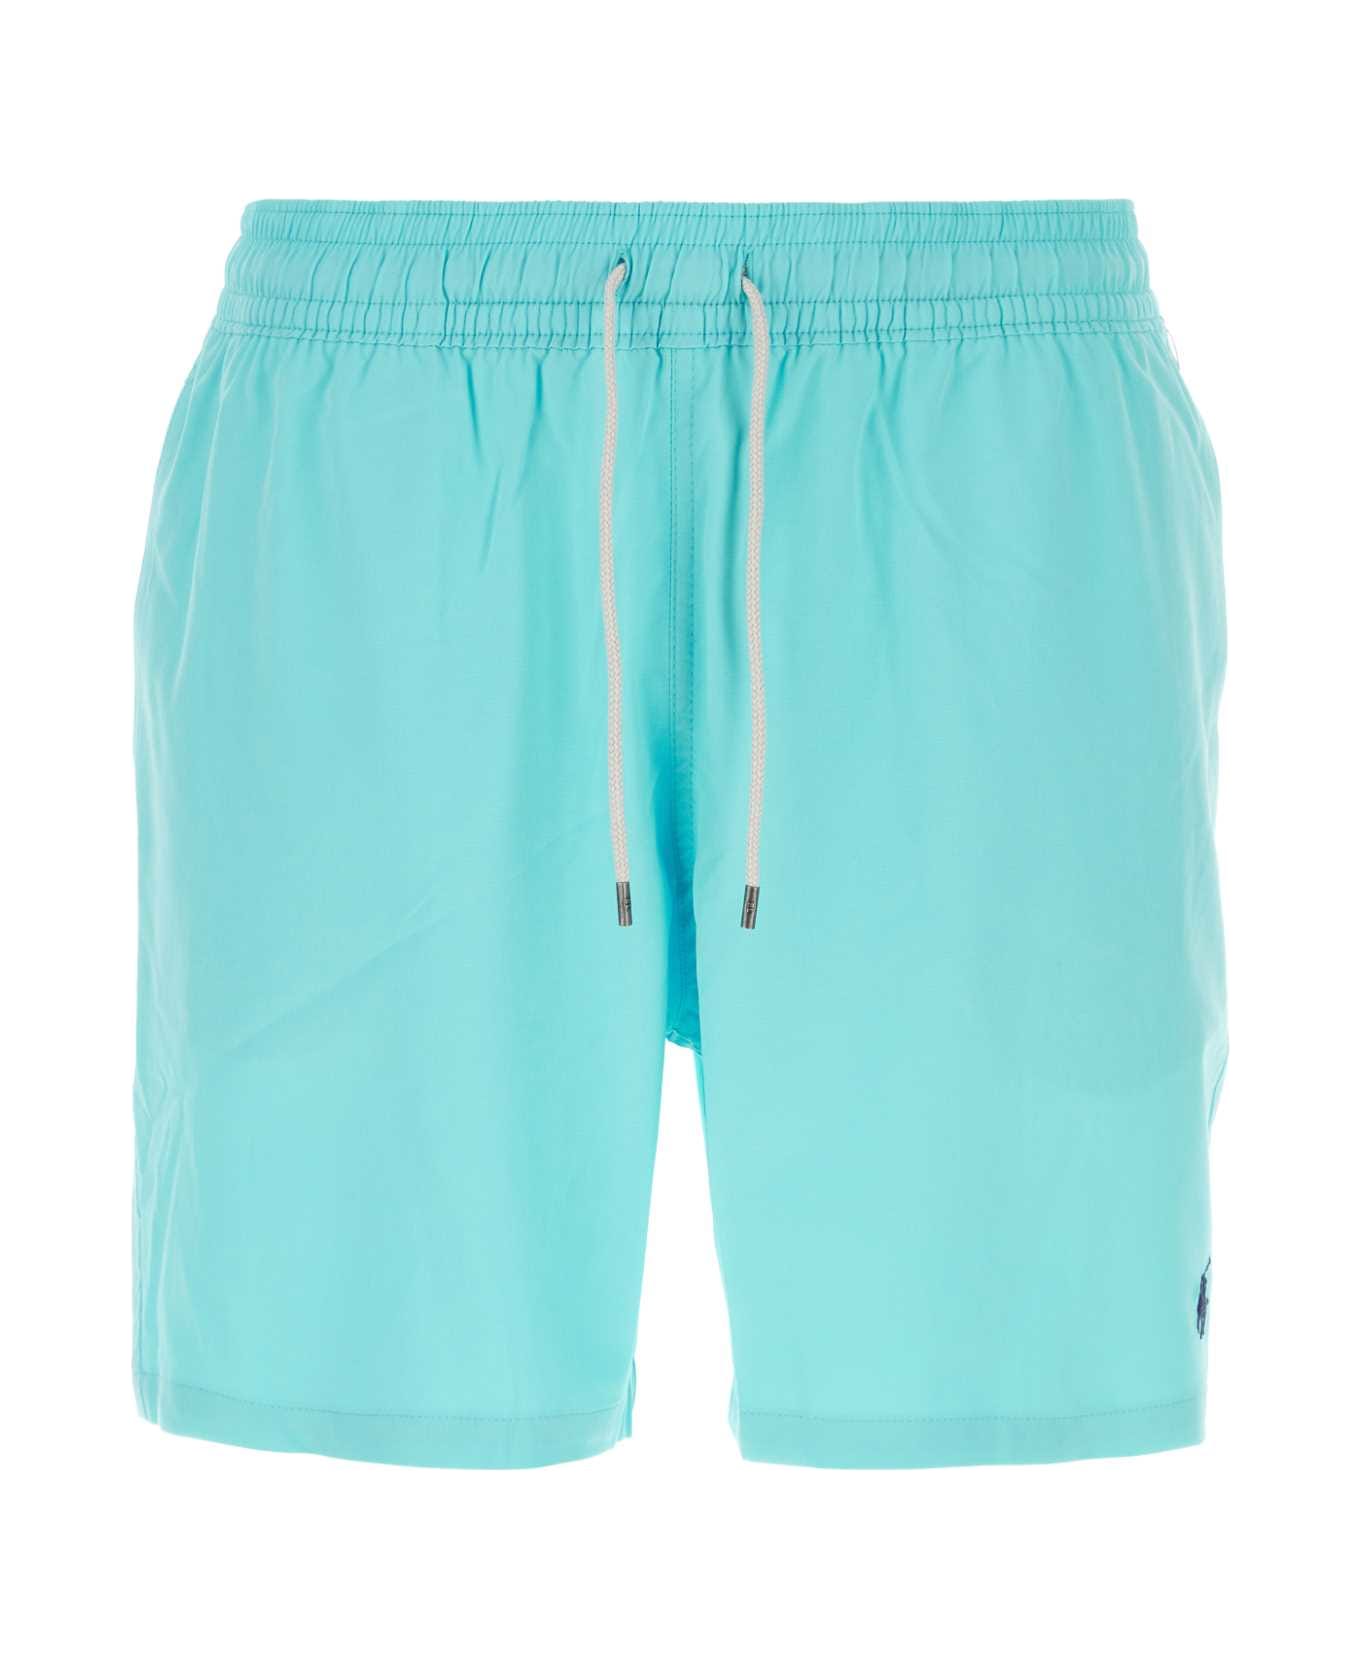 Polo Ralph Lauren Tiffany Stretch Polyester Swimming Shorts - HAMMONDBLUE 水着